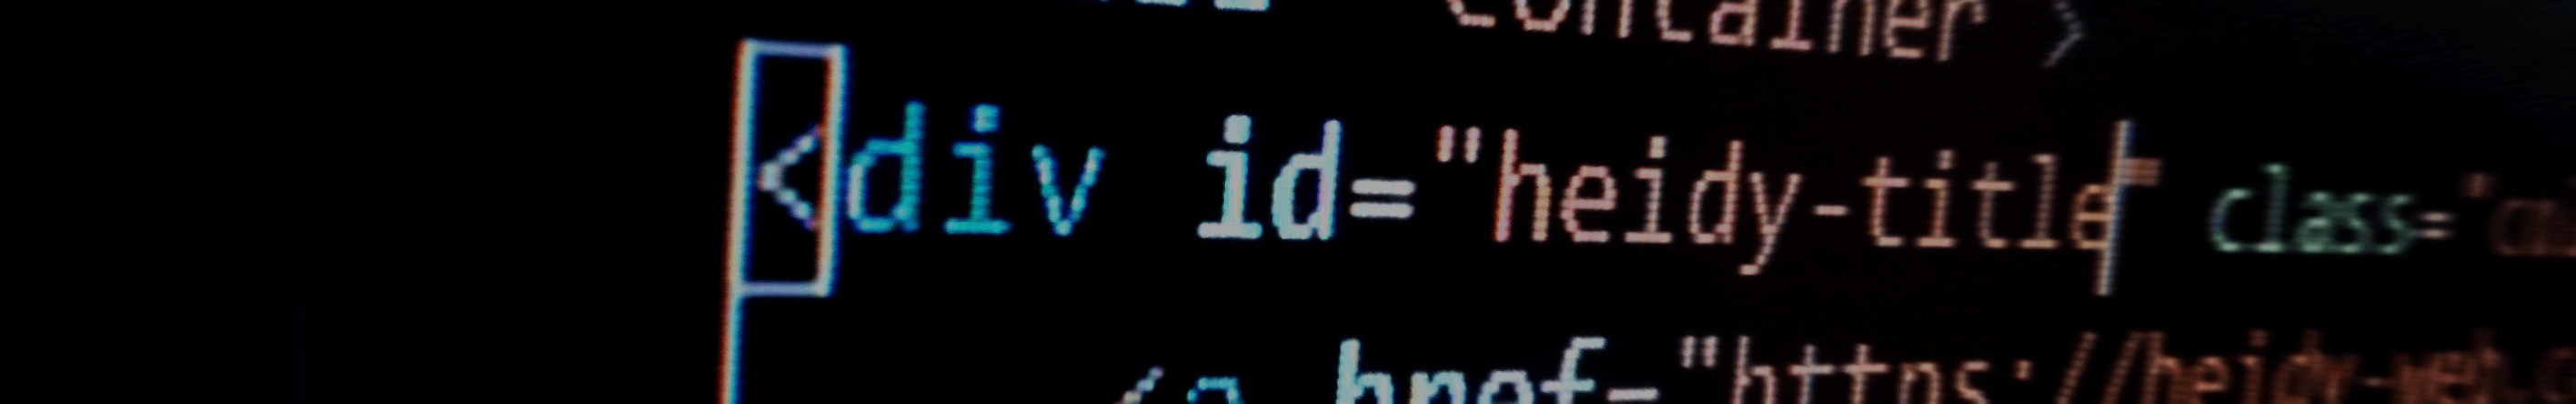 code informatique avec l'identifiant ID